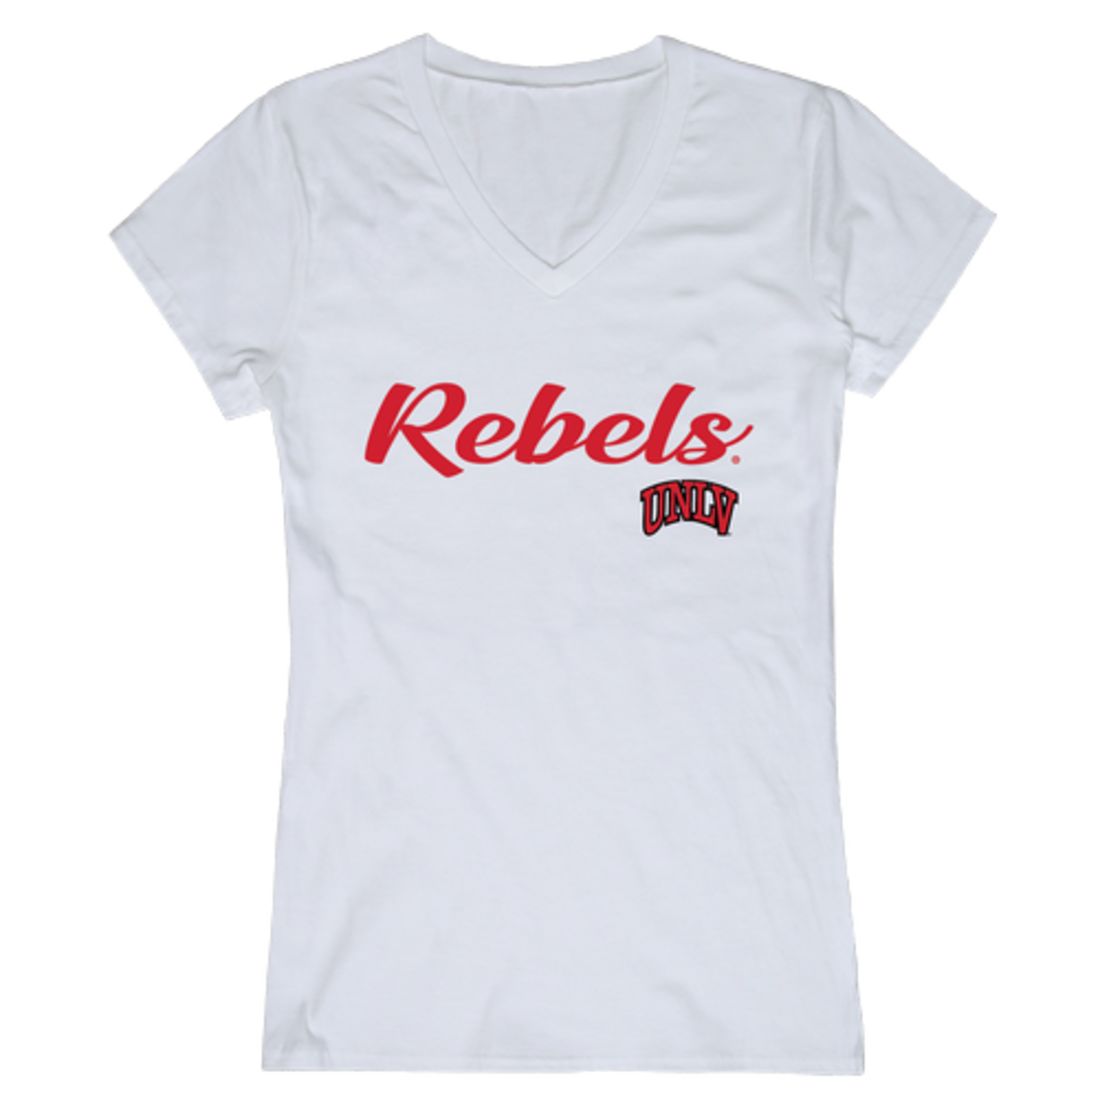 UNLV University of Nevada Las Vegas Rebels Womens Script Tee T-Shirt White Medium - image 1 of 2